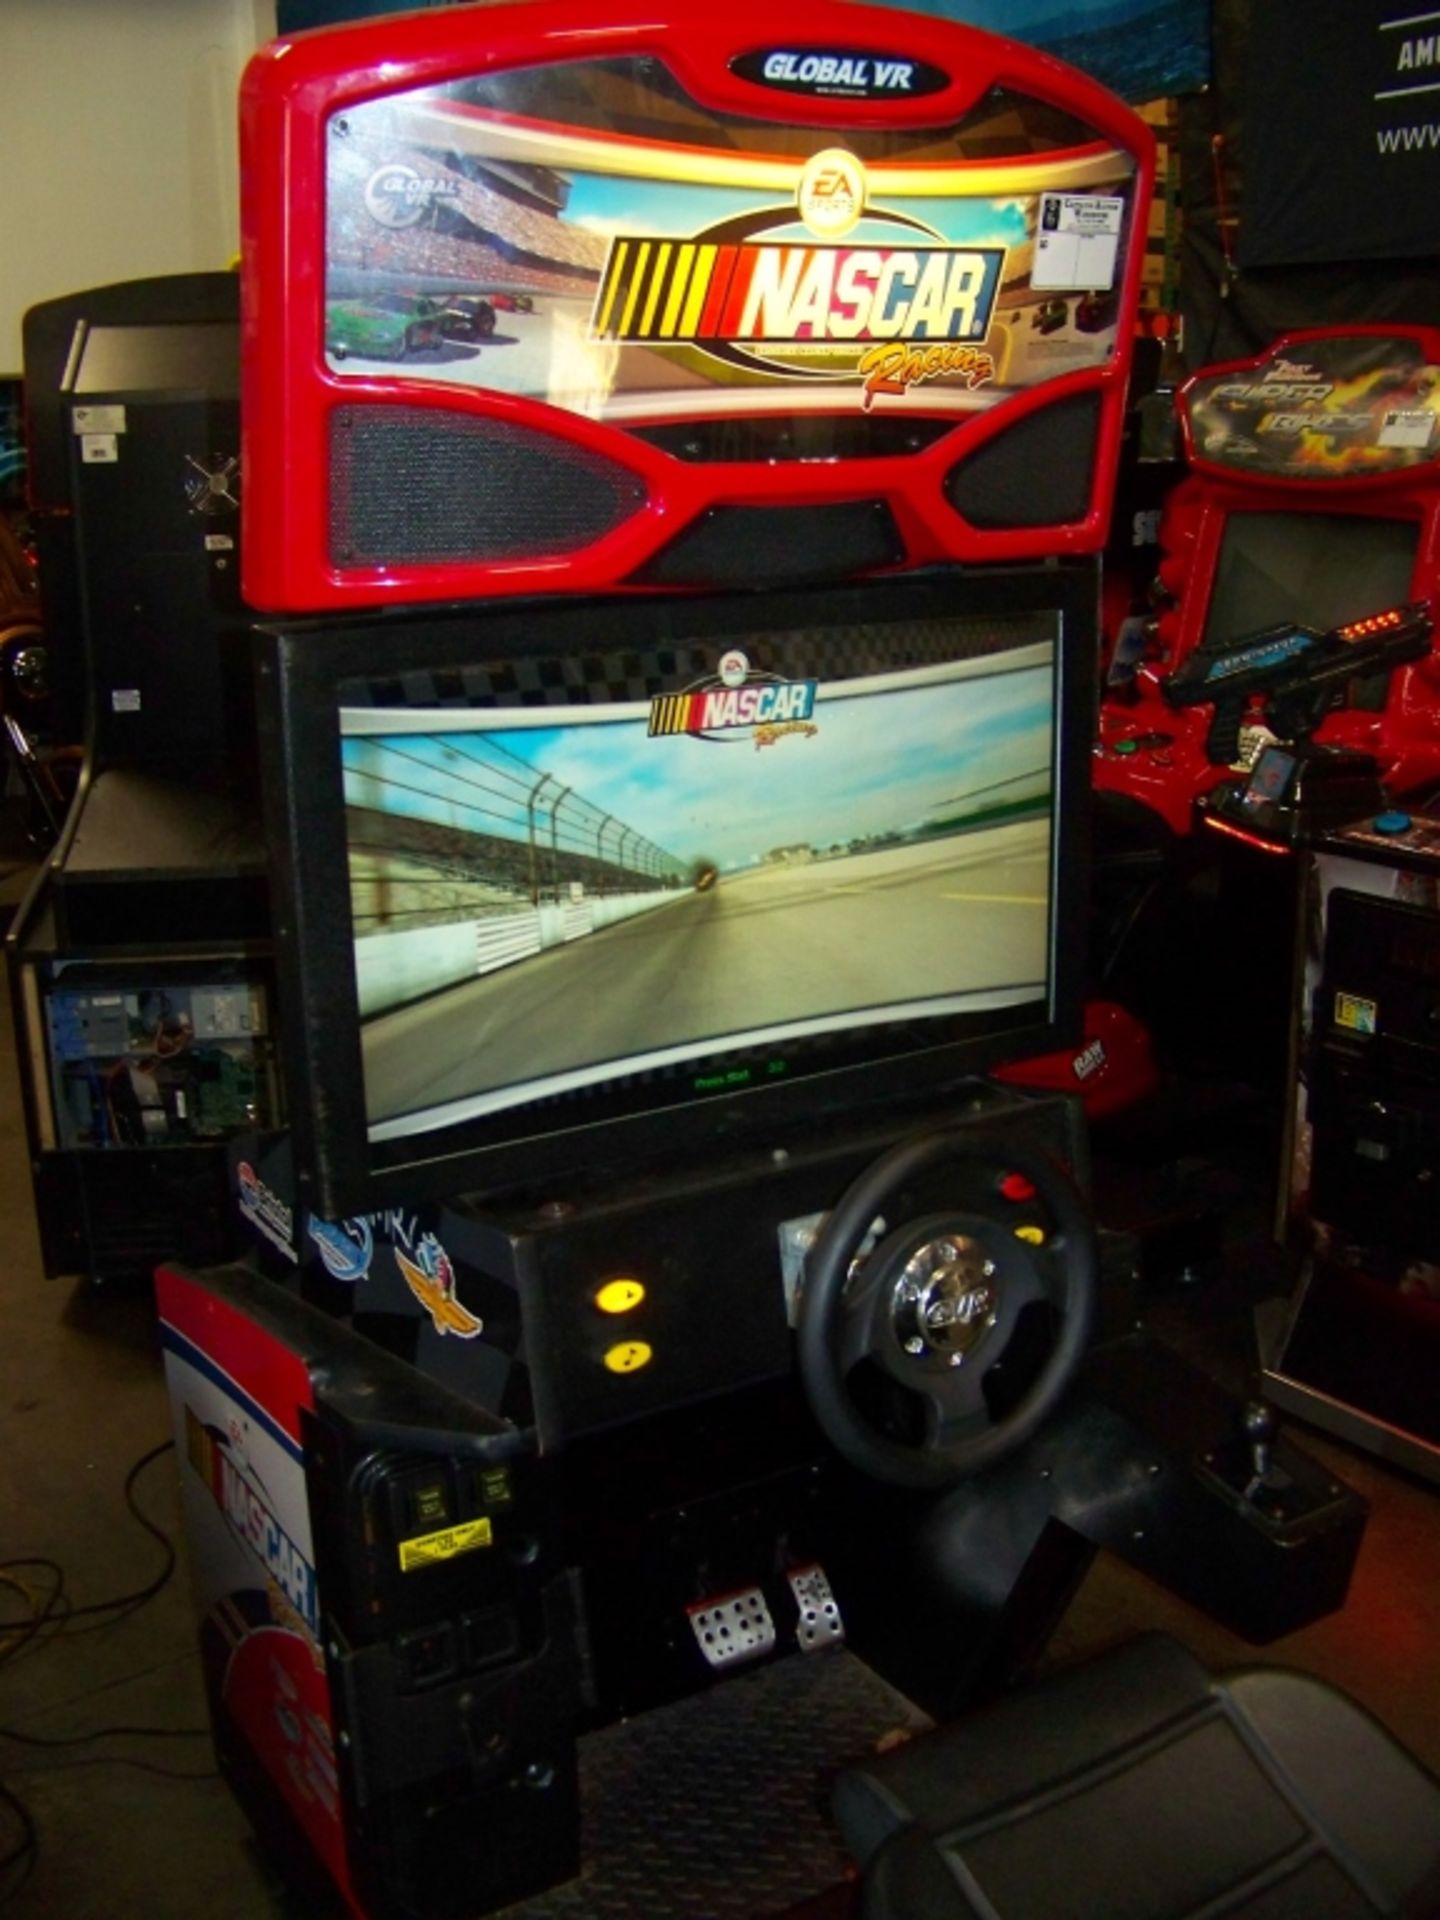 NASCAR RACING ARCADE GAME GLOBAL VR 32" LCD - Image 2 of 6